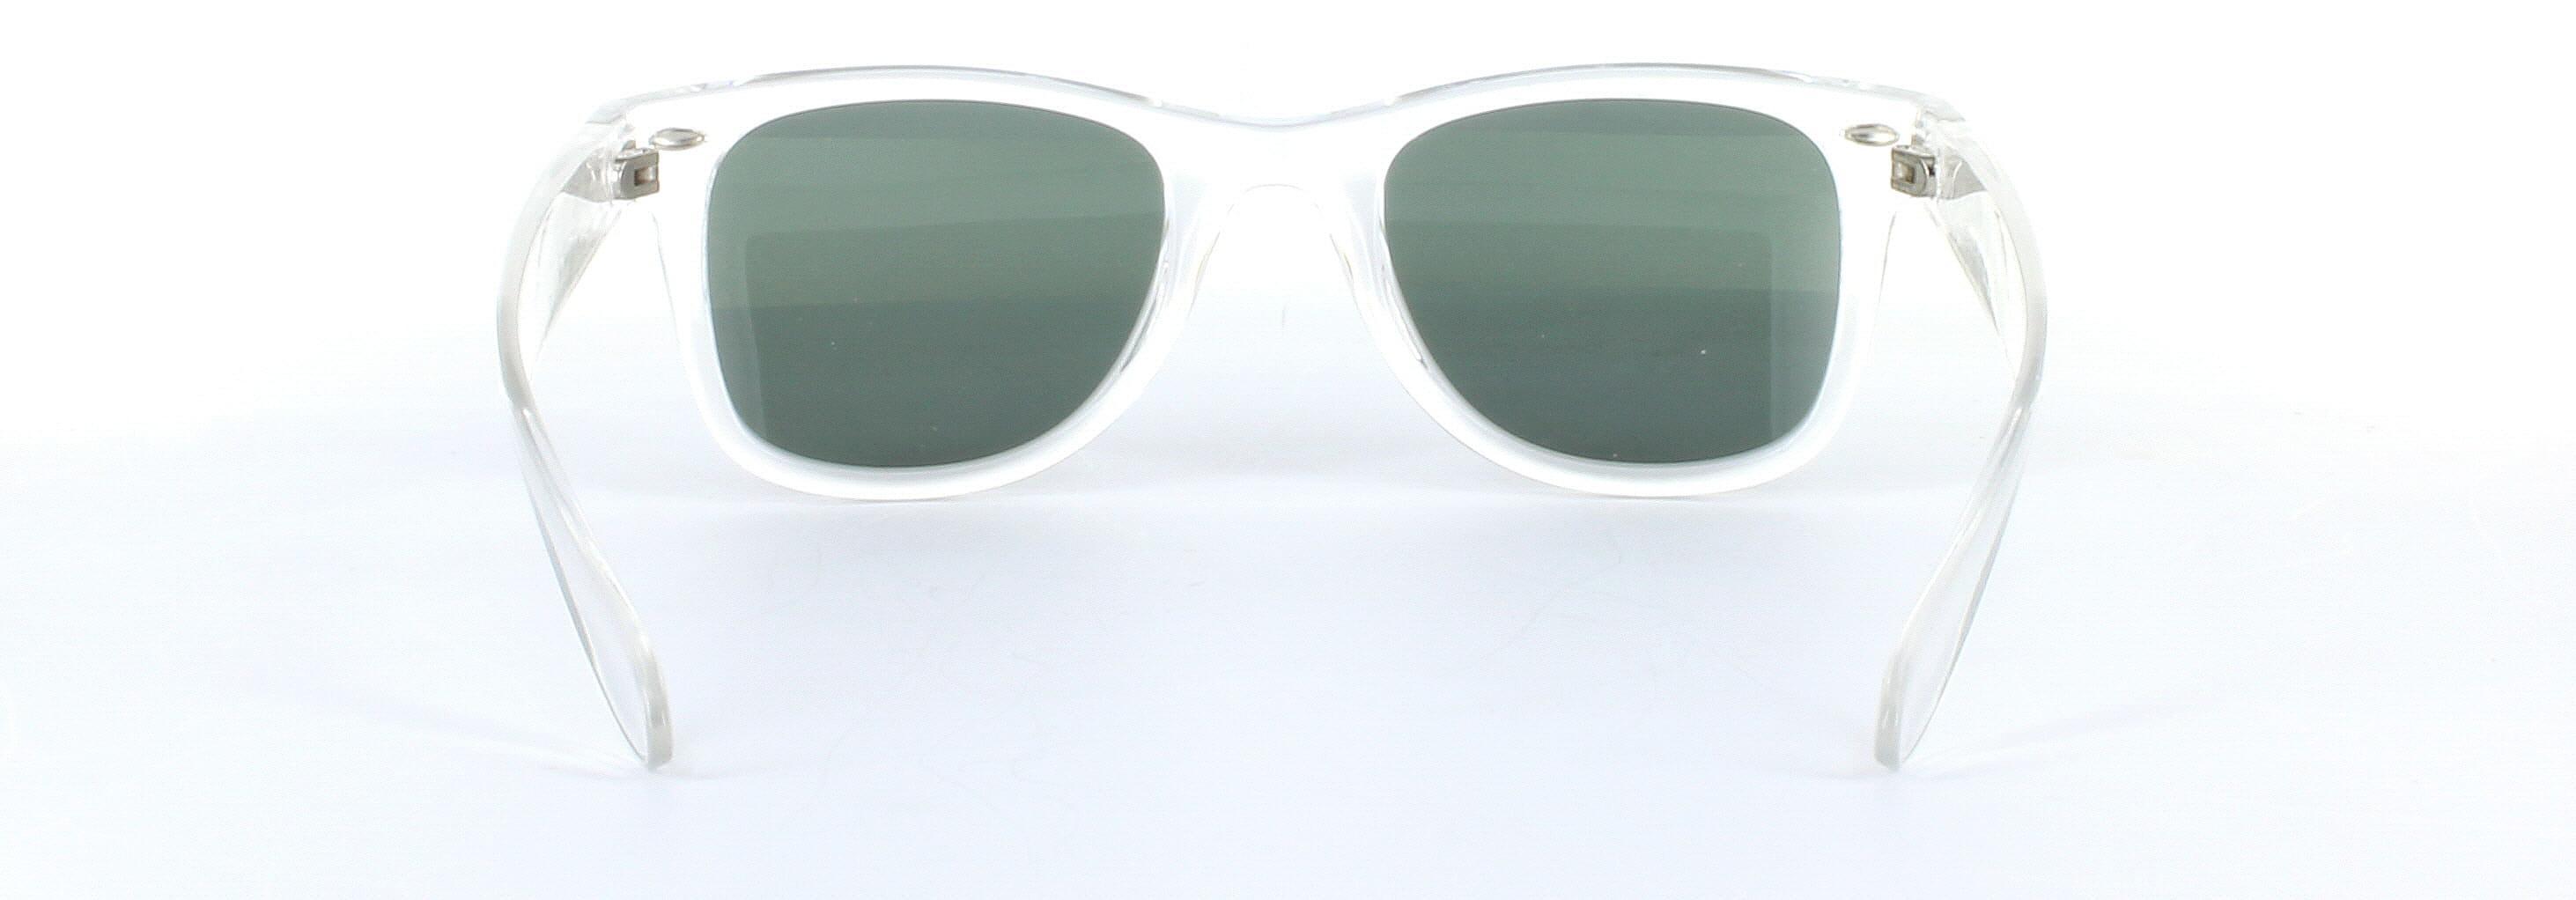 England Crystal Full Rim Plastic Sunglasses - Image View 3